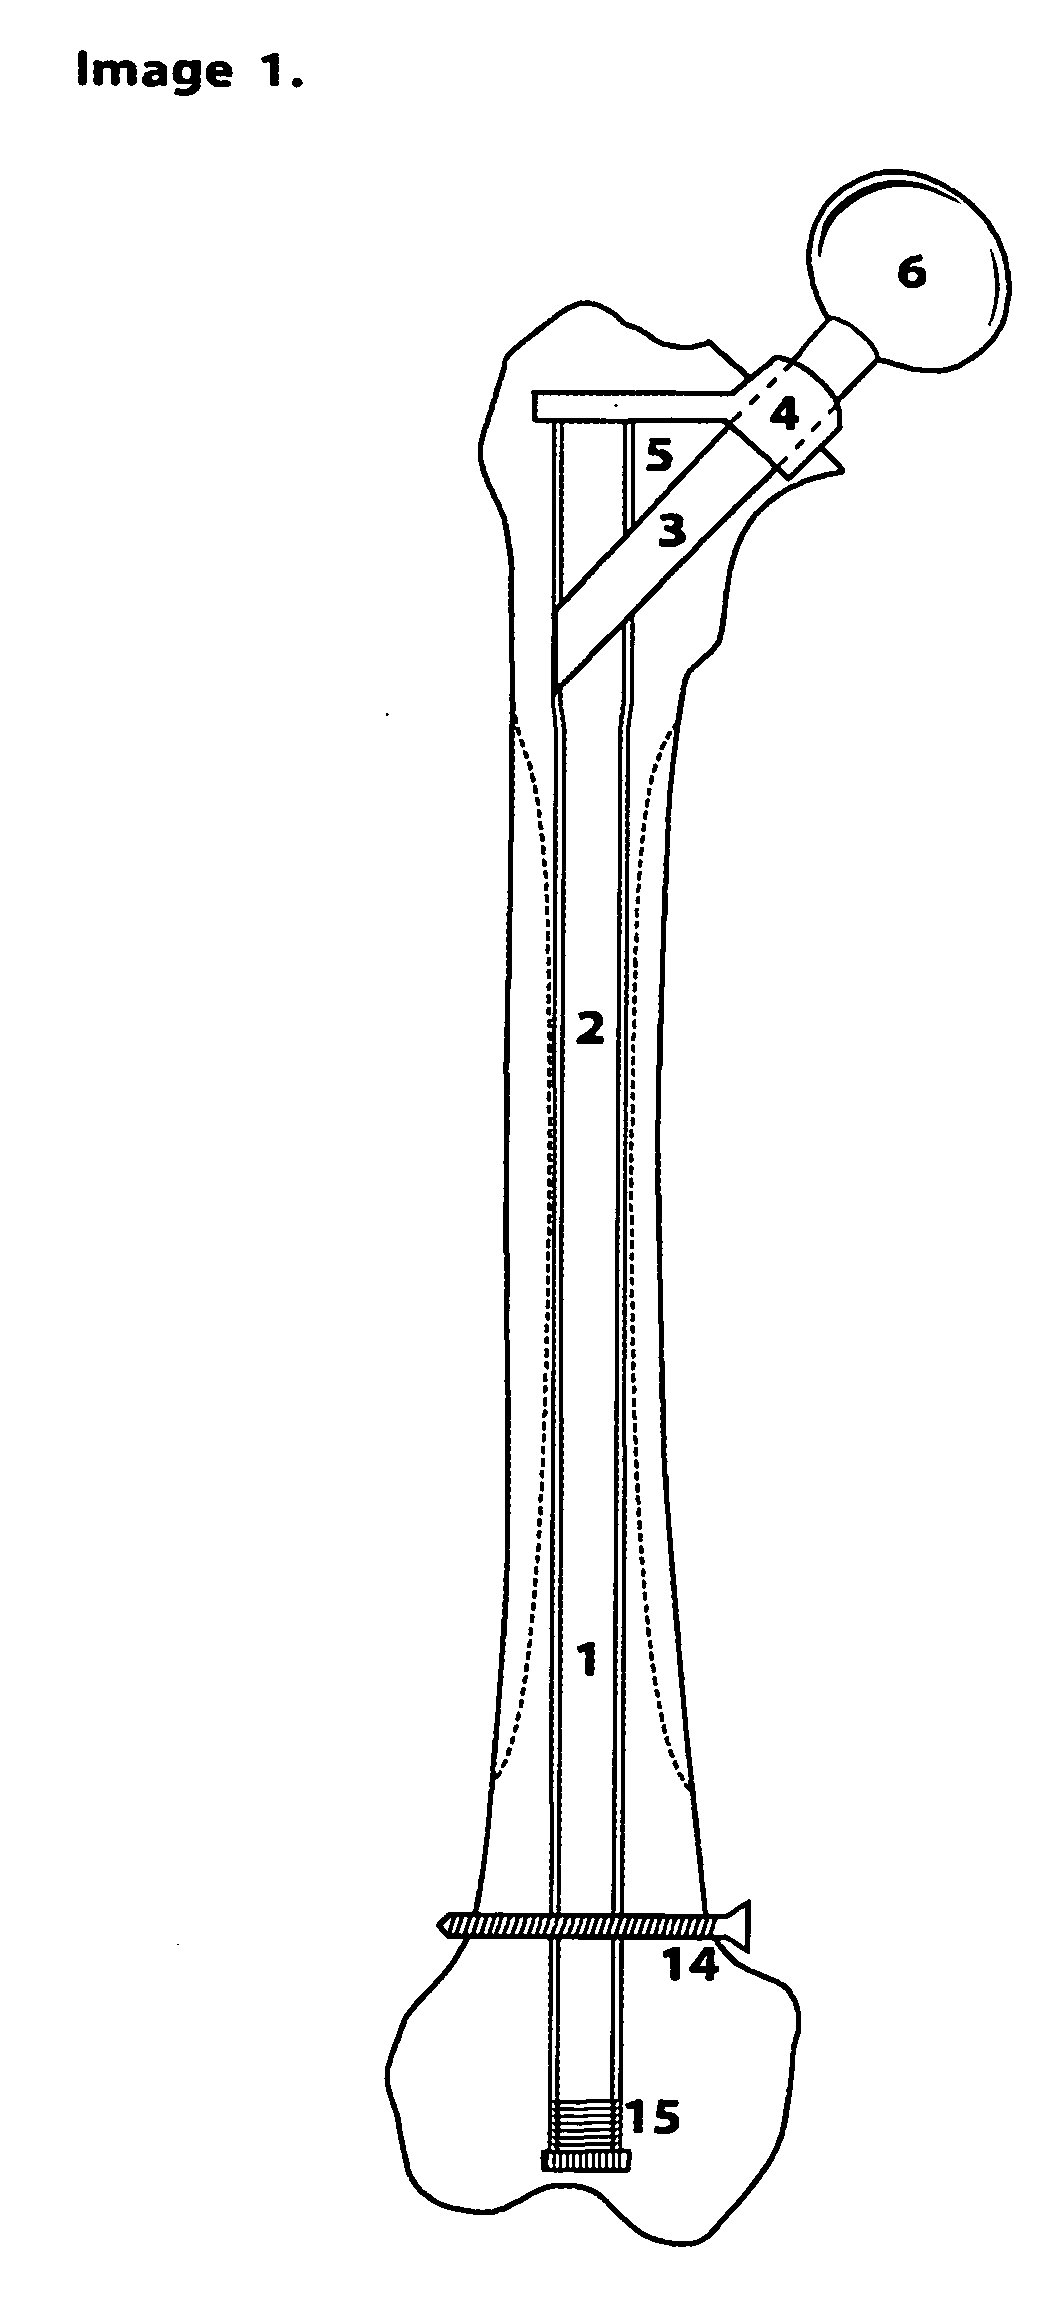 O'Gara femur prosthesis